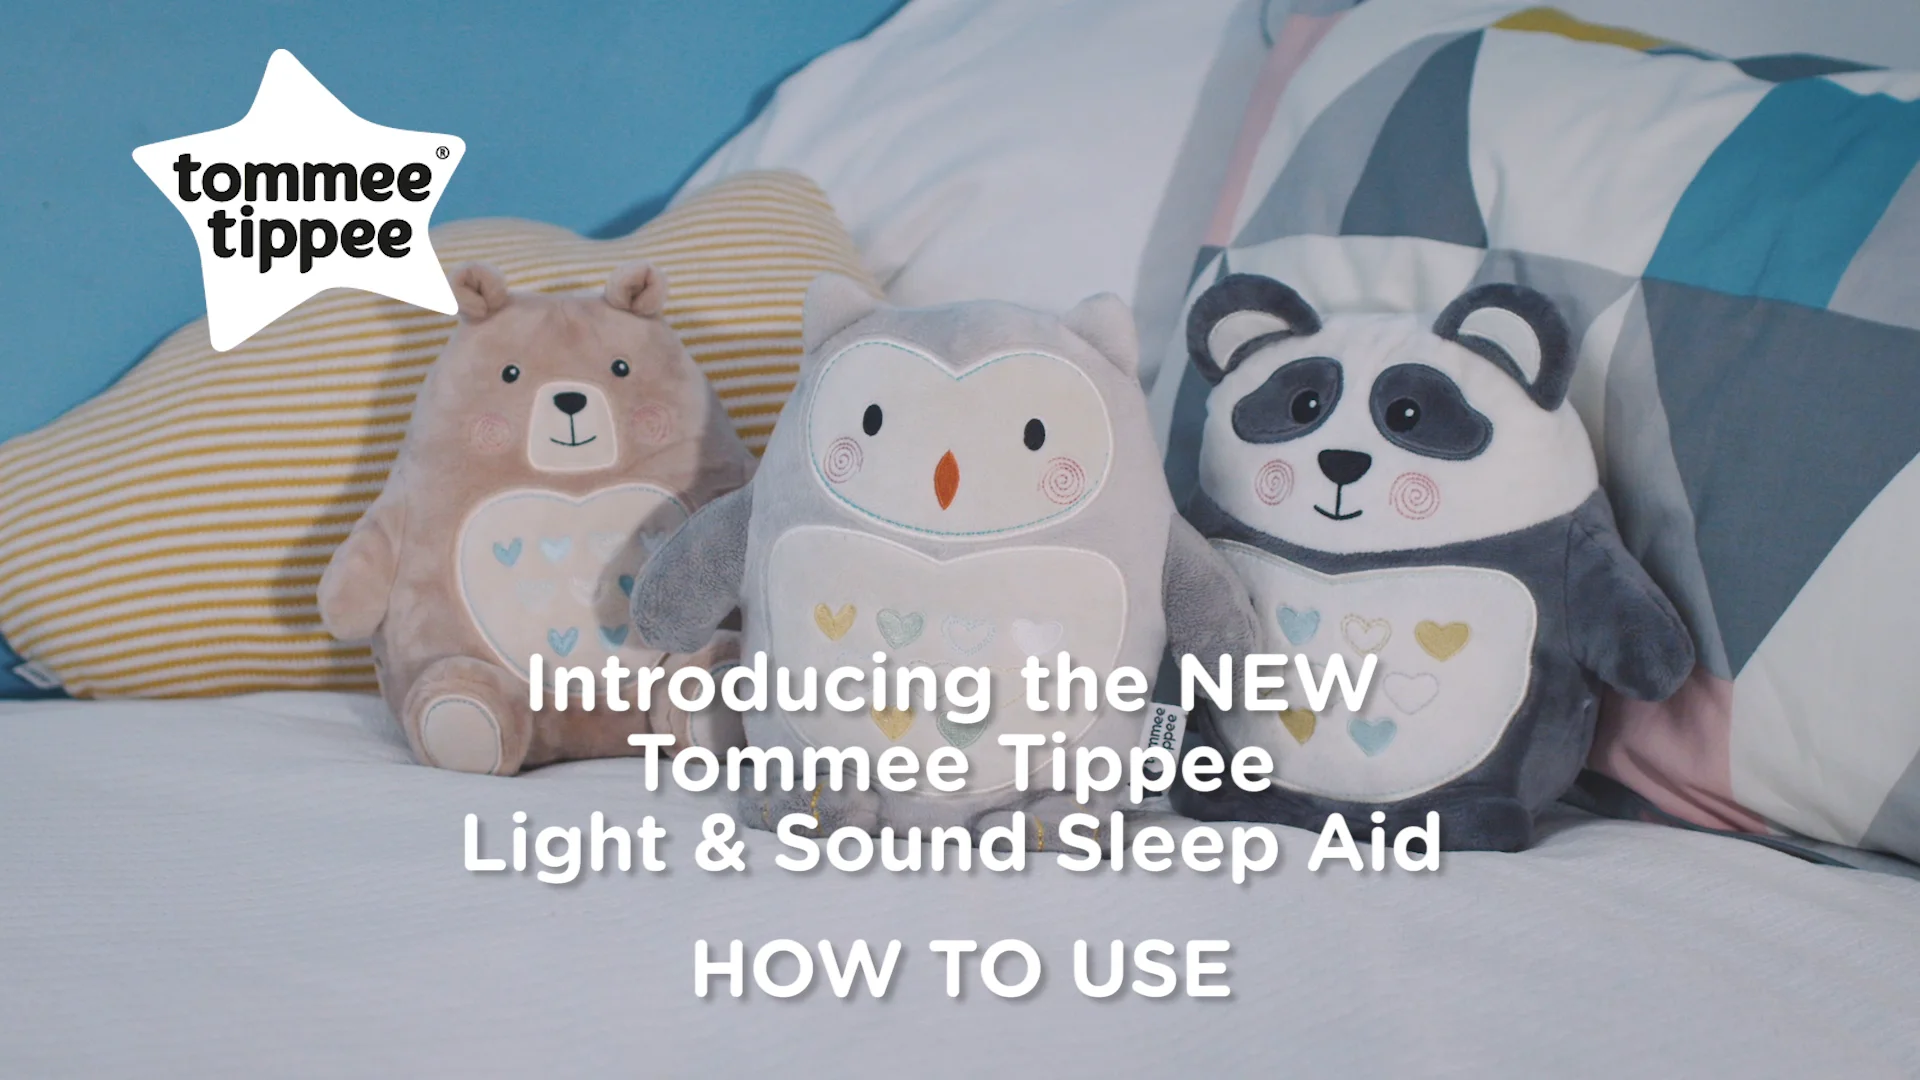 Light & Sound Sleep Aid How to Use on Vimeo